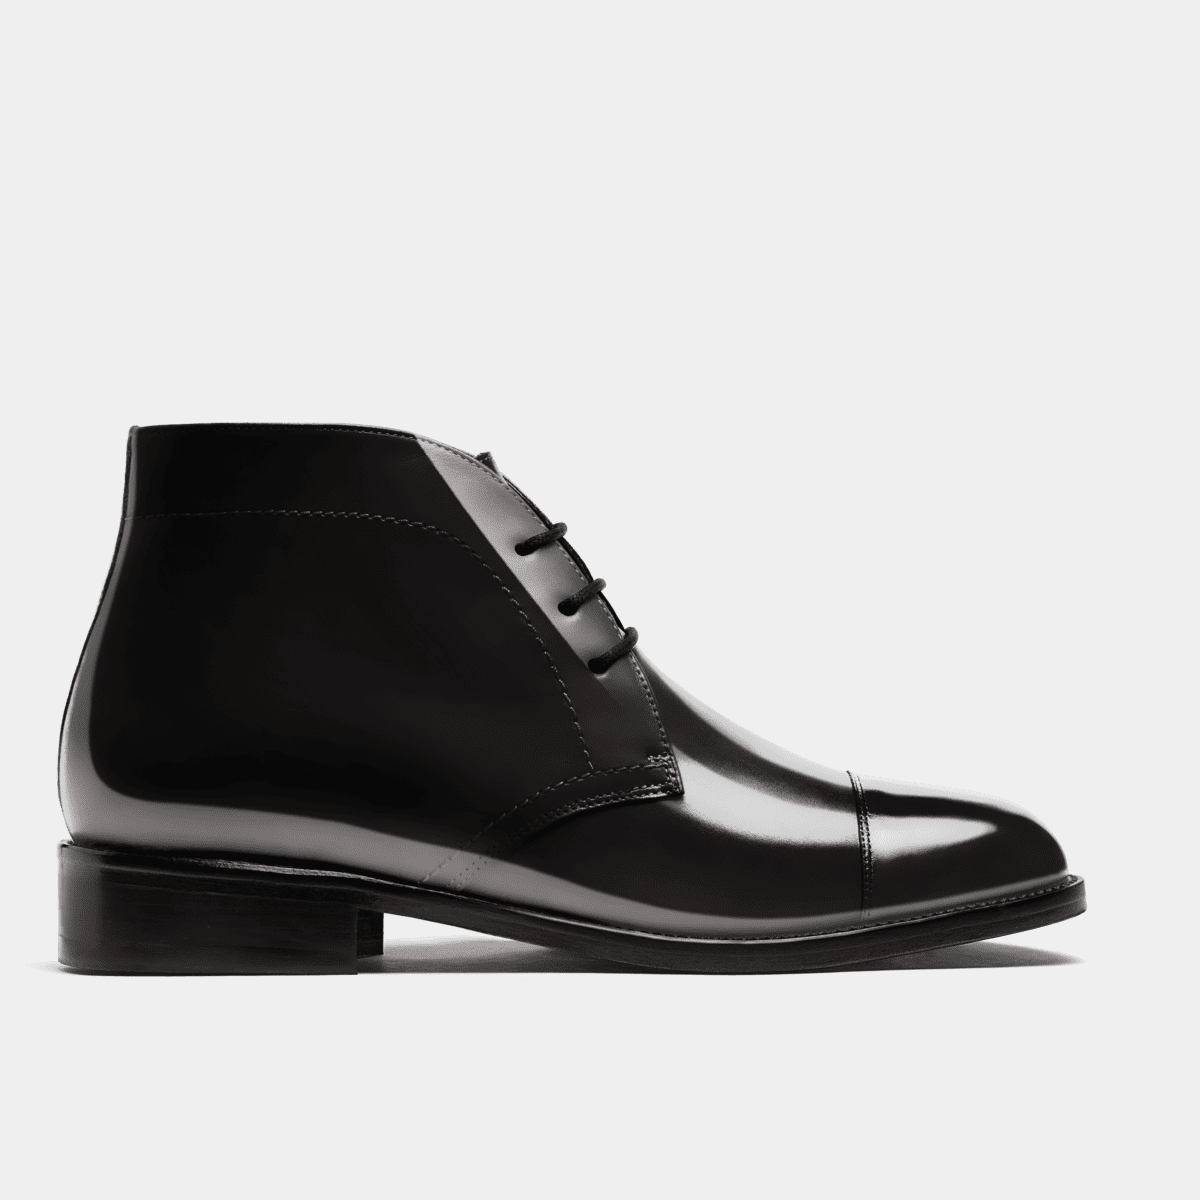 Cap toe Chukka Boots - black flora leather | Sumissura